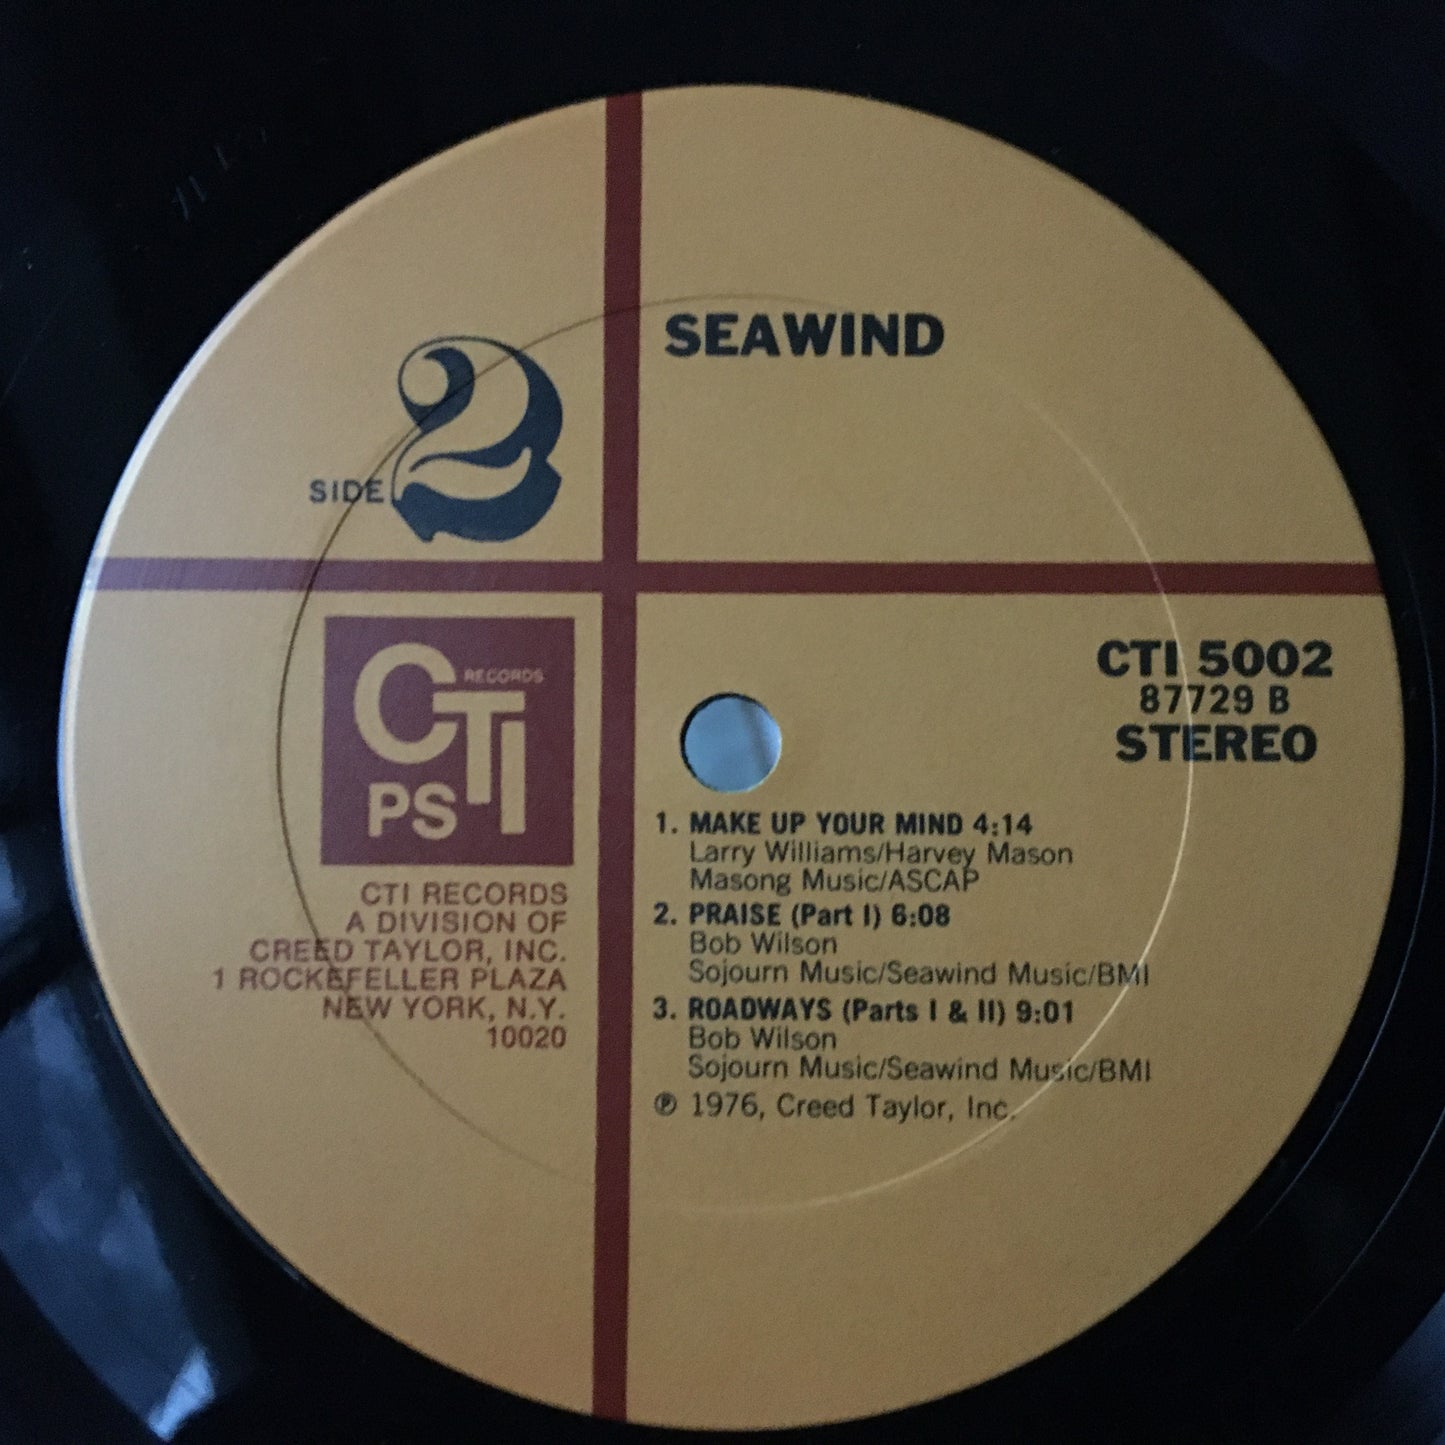 Seawind – Seawind